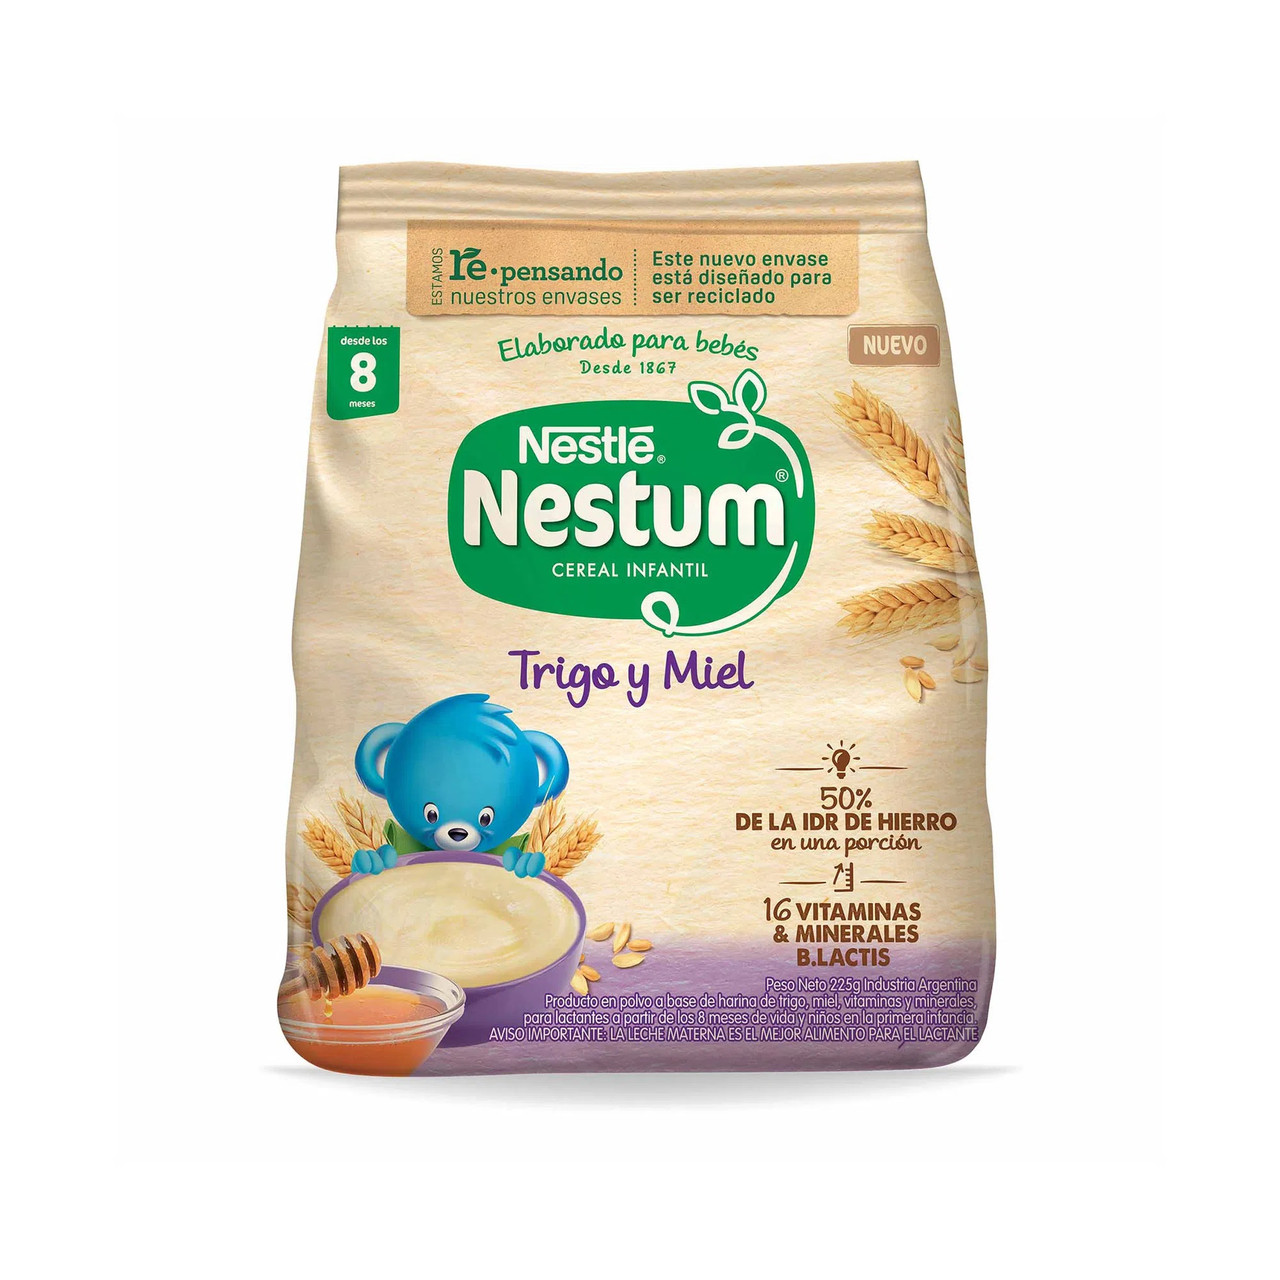 Nestum Nestlé Papilla de cereales sin gluten, a partir de 4 meses